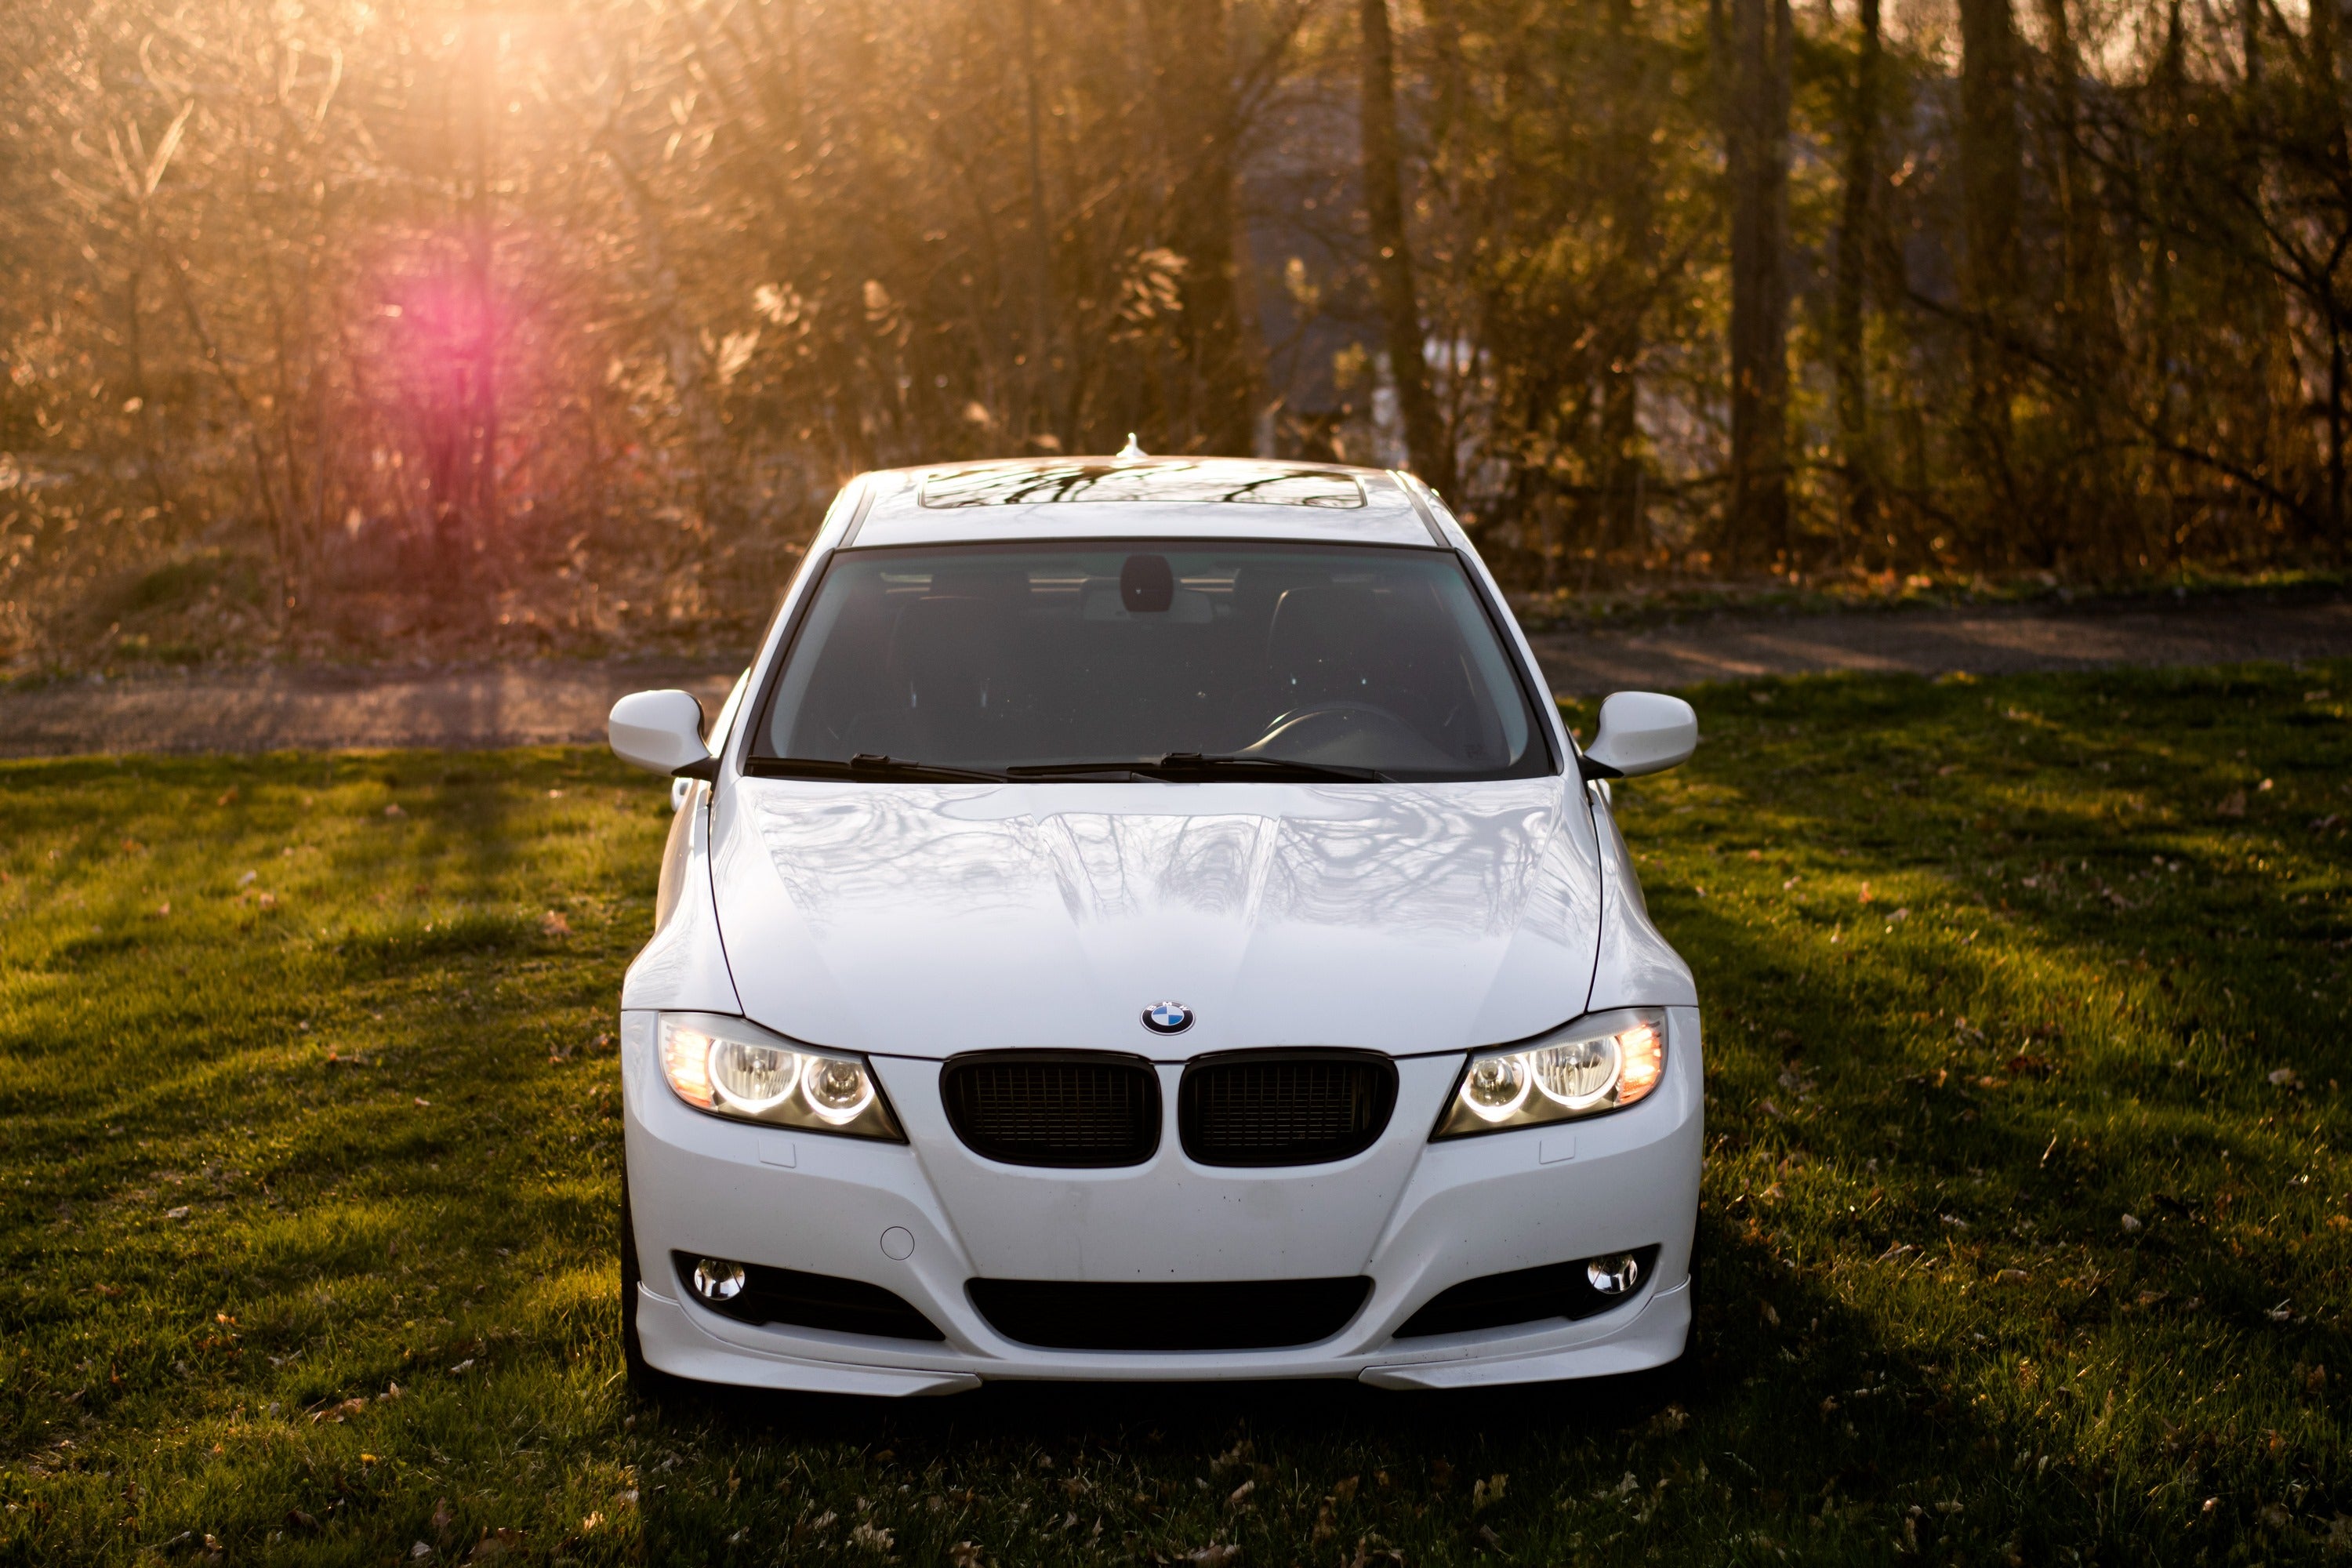 12 WATT LED Module Version 4.0 passend für BMW E90 E91 Facelift Angel Eyes